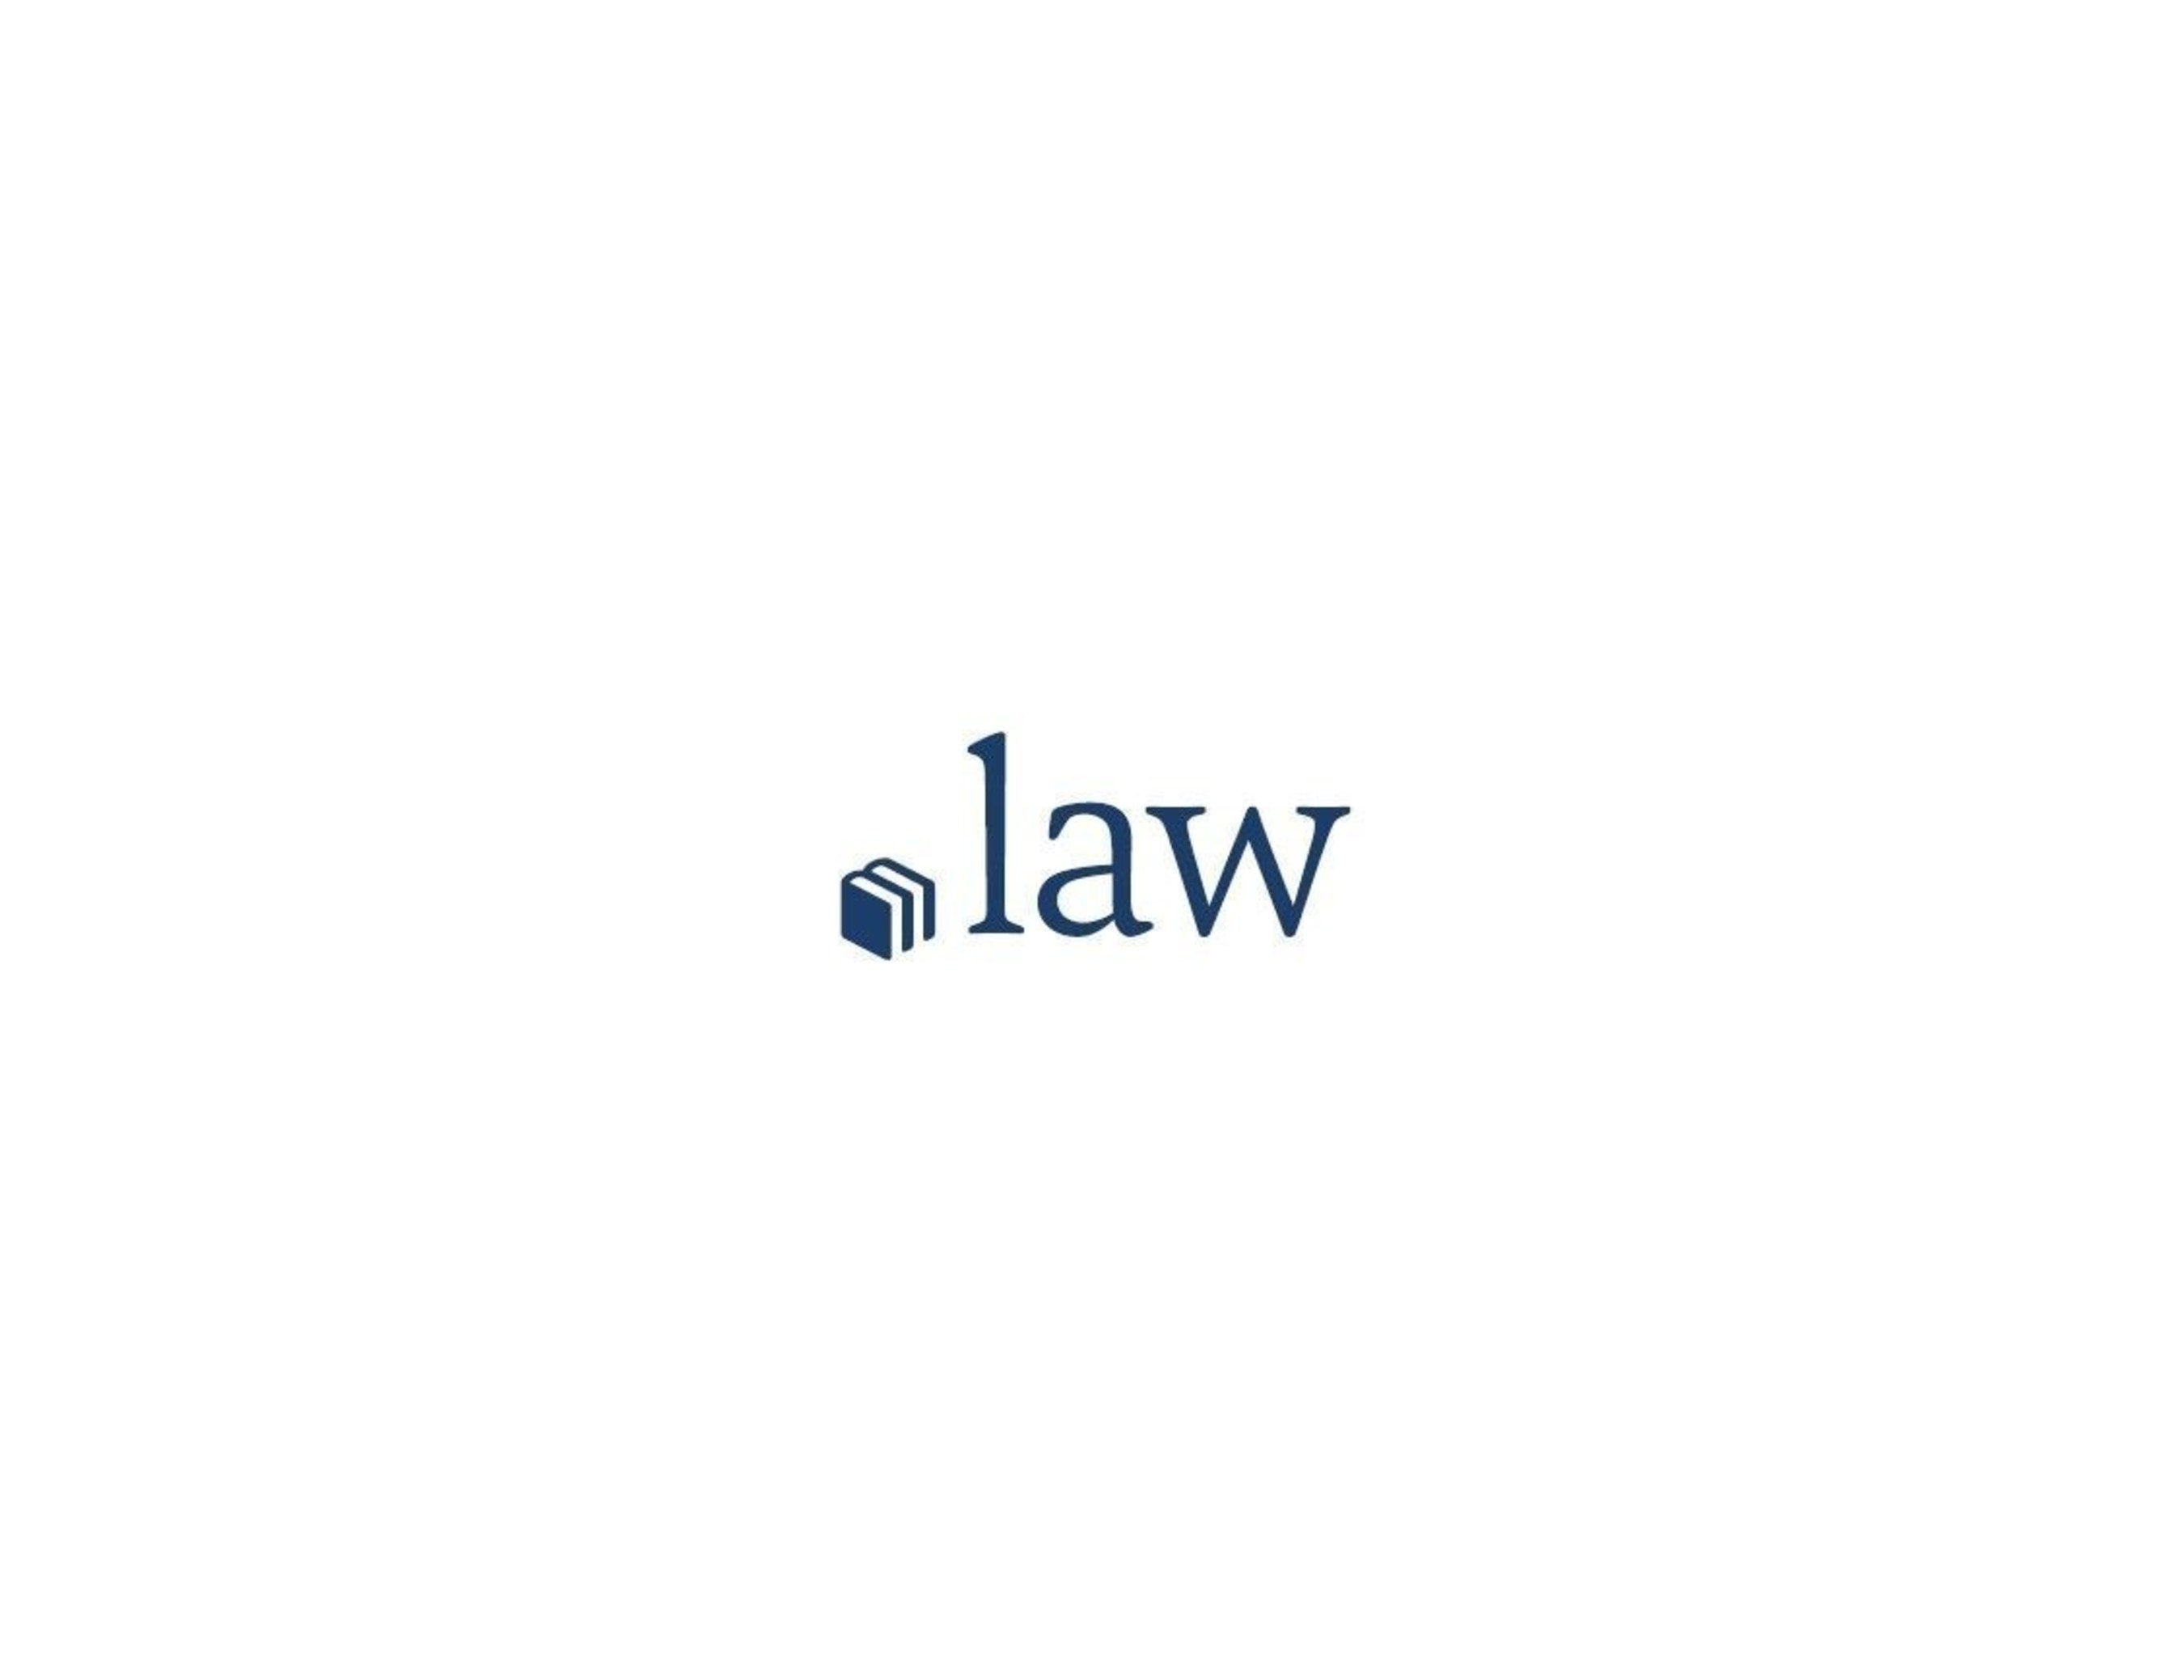 .law logo (PRNewsFoto/Minds + Machines) (PRNewsFoto/Minds + Machines)